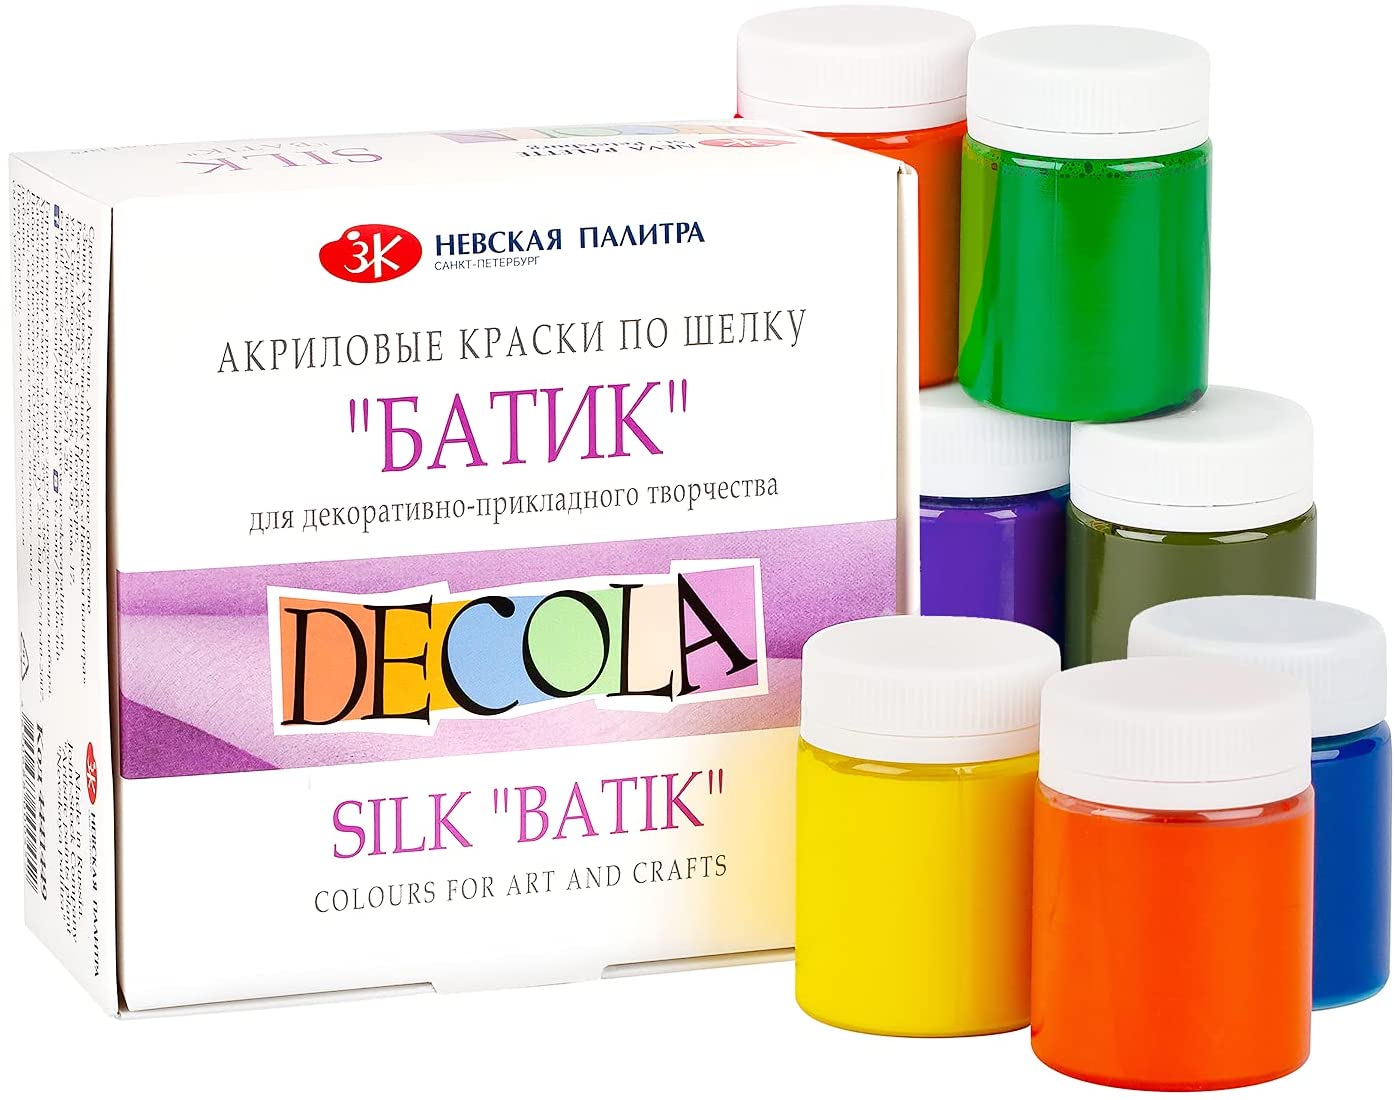 Silk painting supplies – Nevskaya Palitra Silk Paint Set